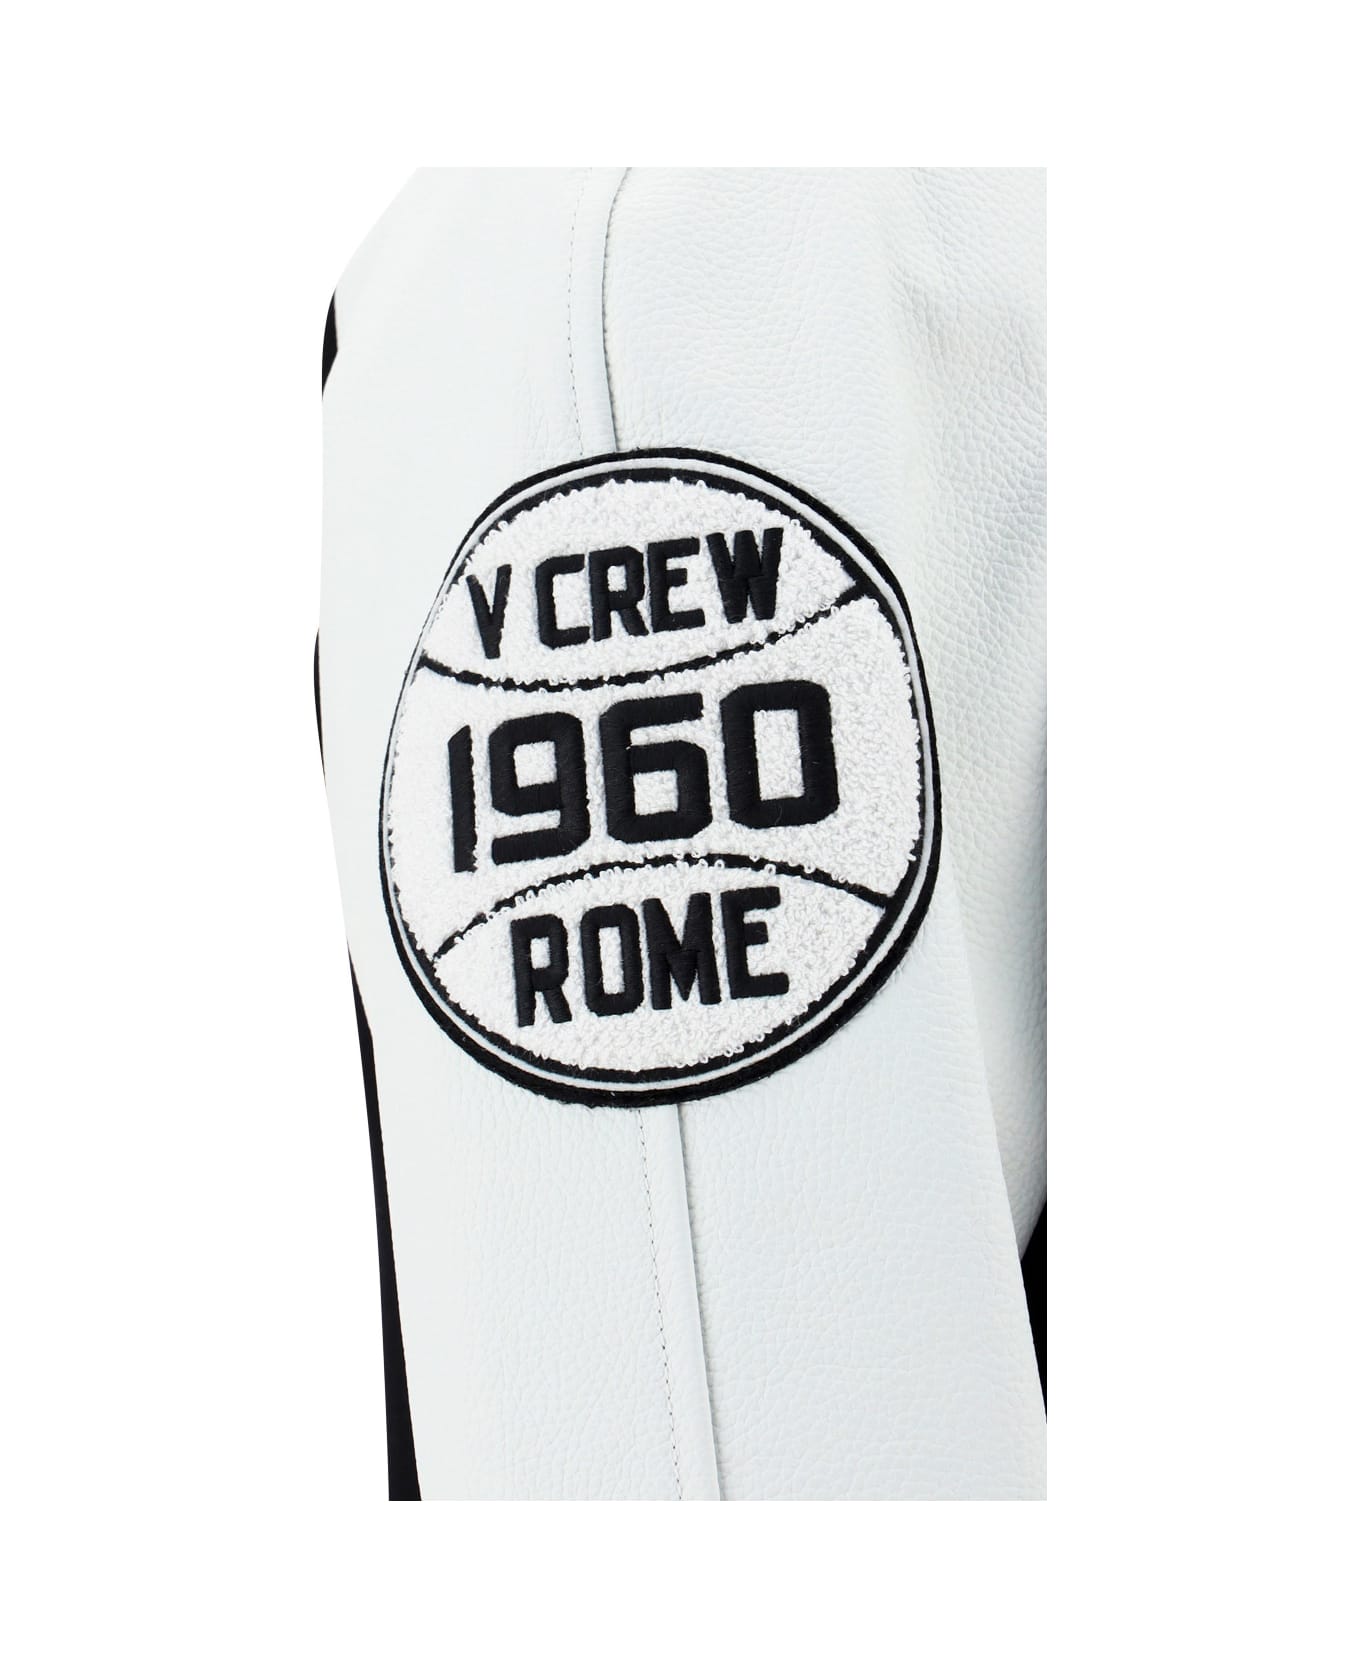 Valentino Vcrew Bomber Jacket - Nero/avorio